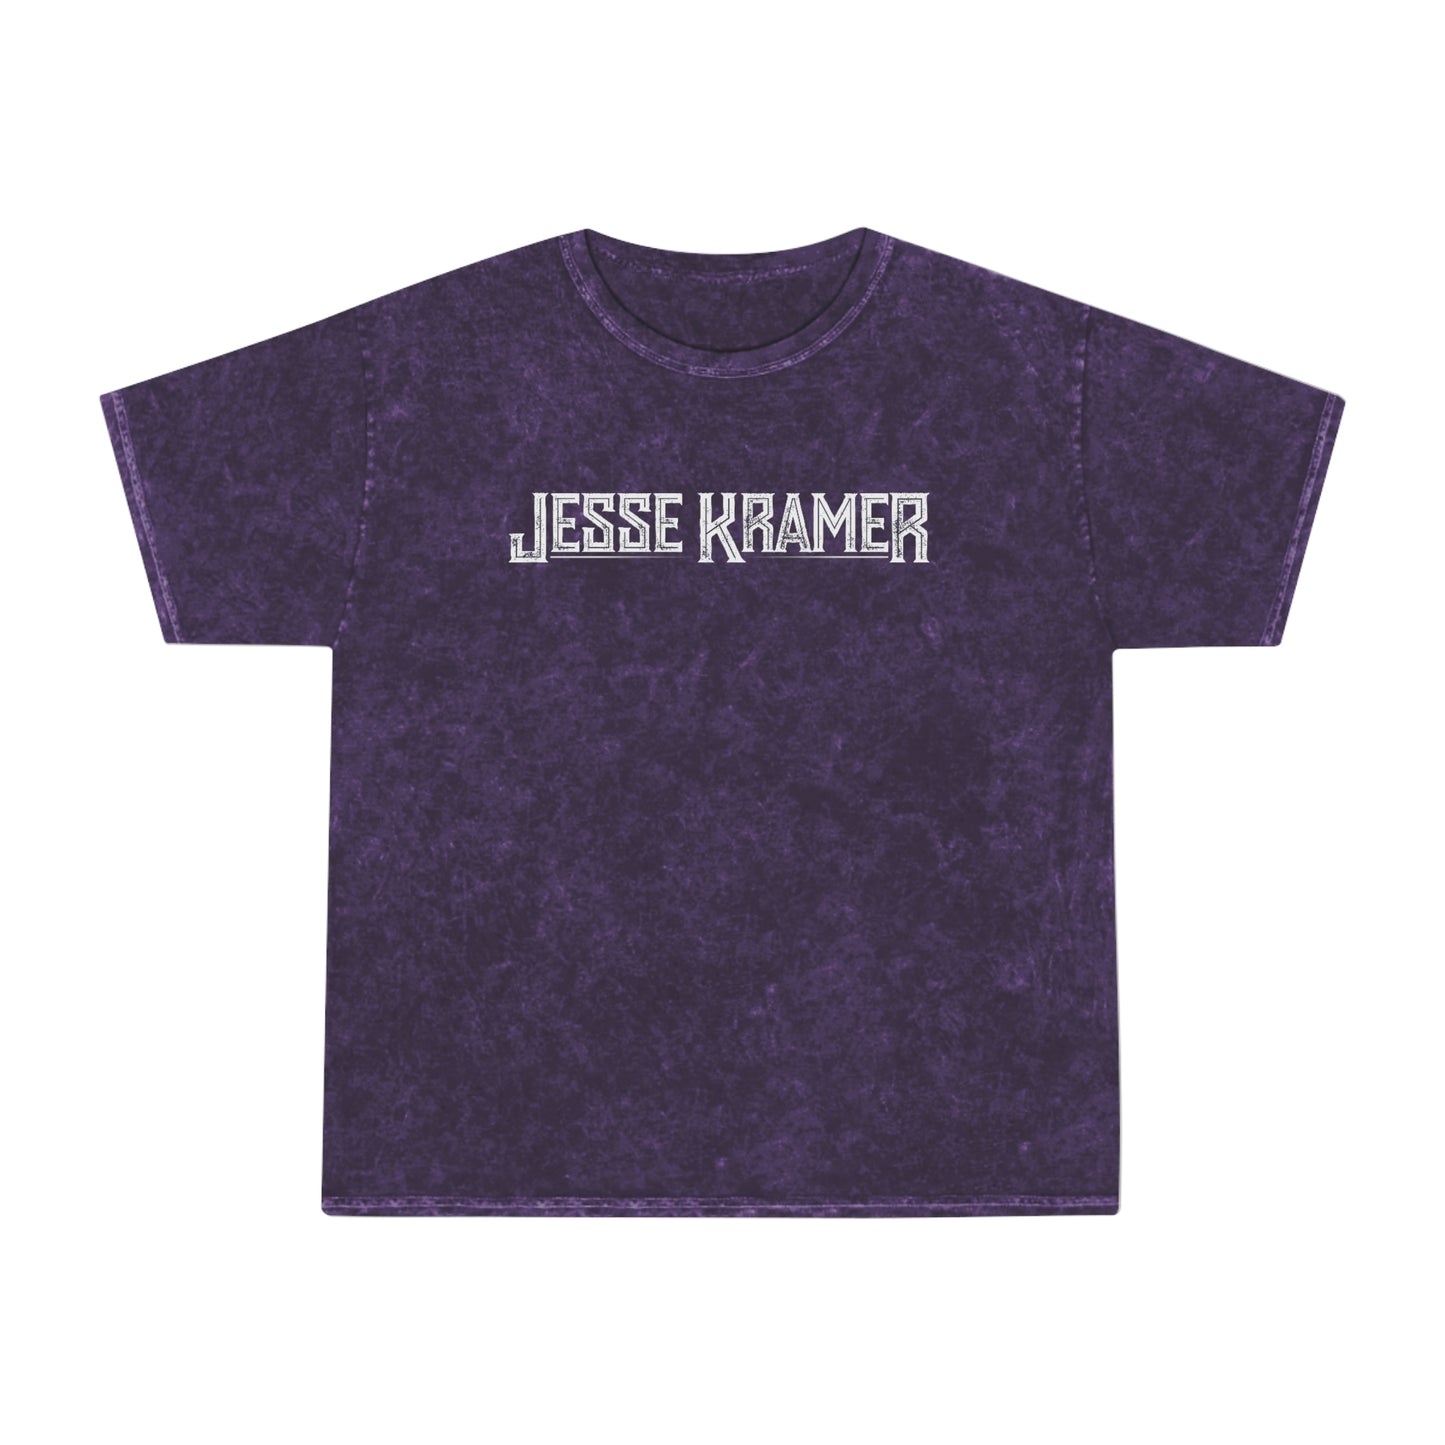 Jesse Kramer Unisex Mineral Wash T-Shirt